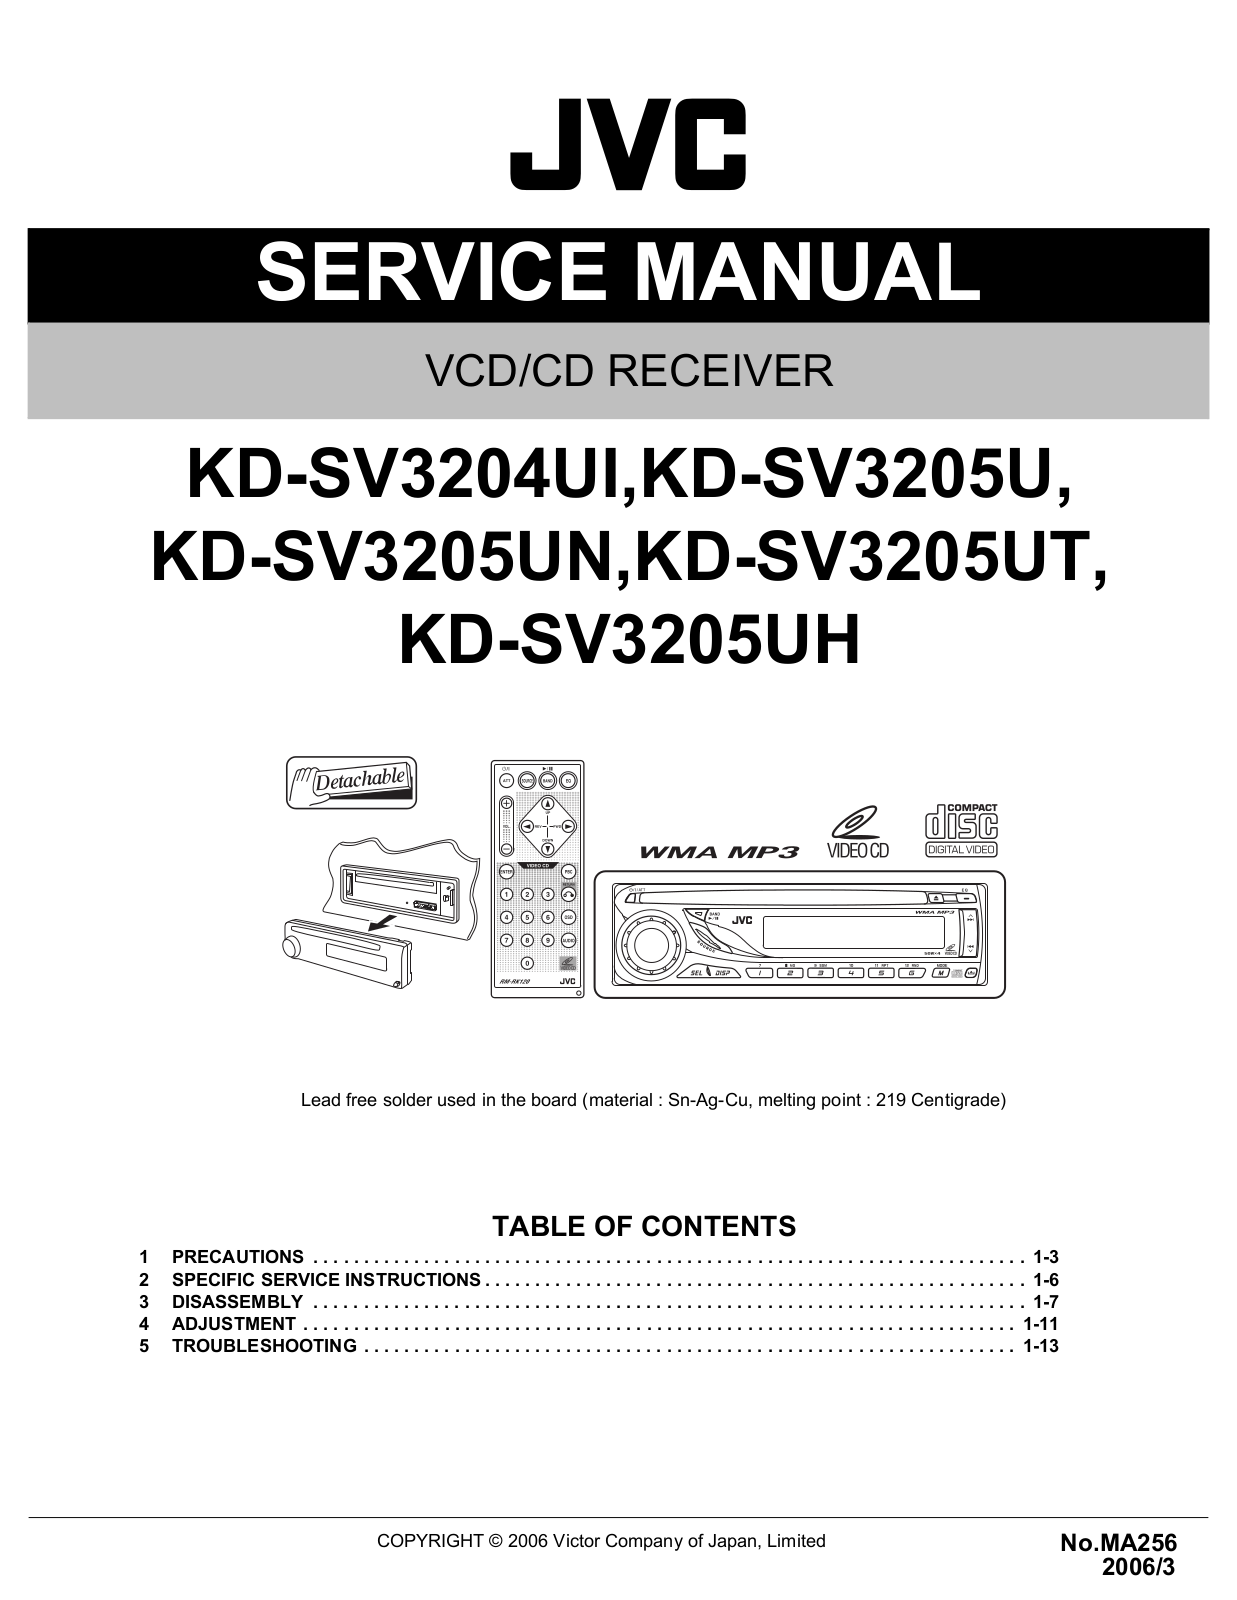 Jvc KD-SV3205-UT, KD-SV3205-UN, KD-SV3205-UH, KD-SV3205-U, KD-SV3204-UI Service Manual